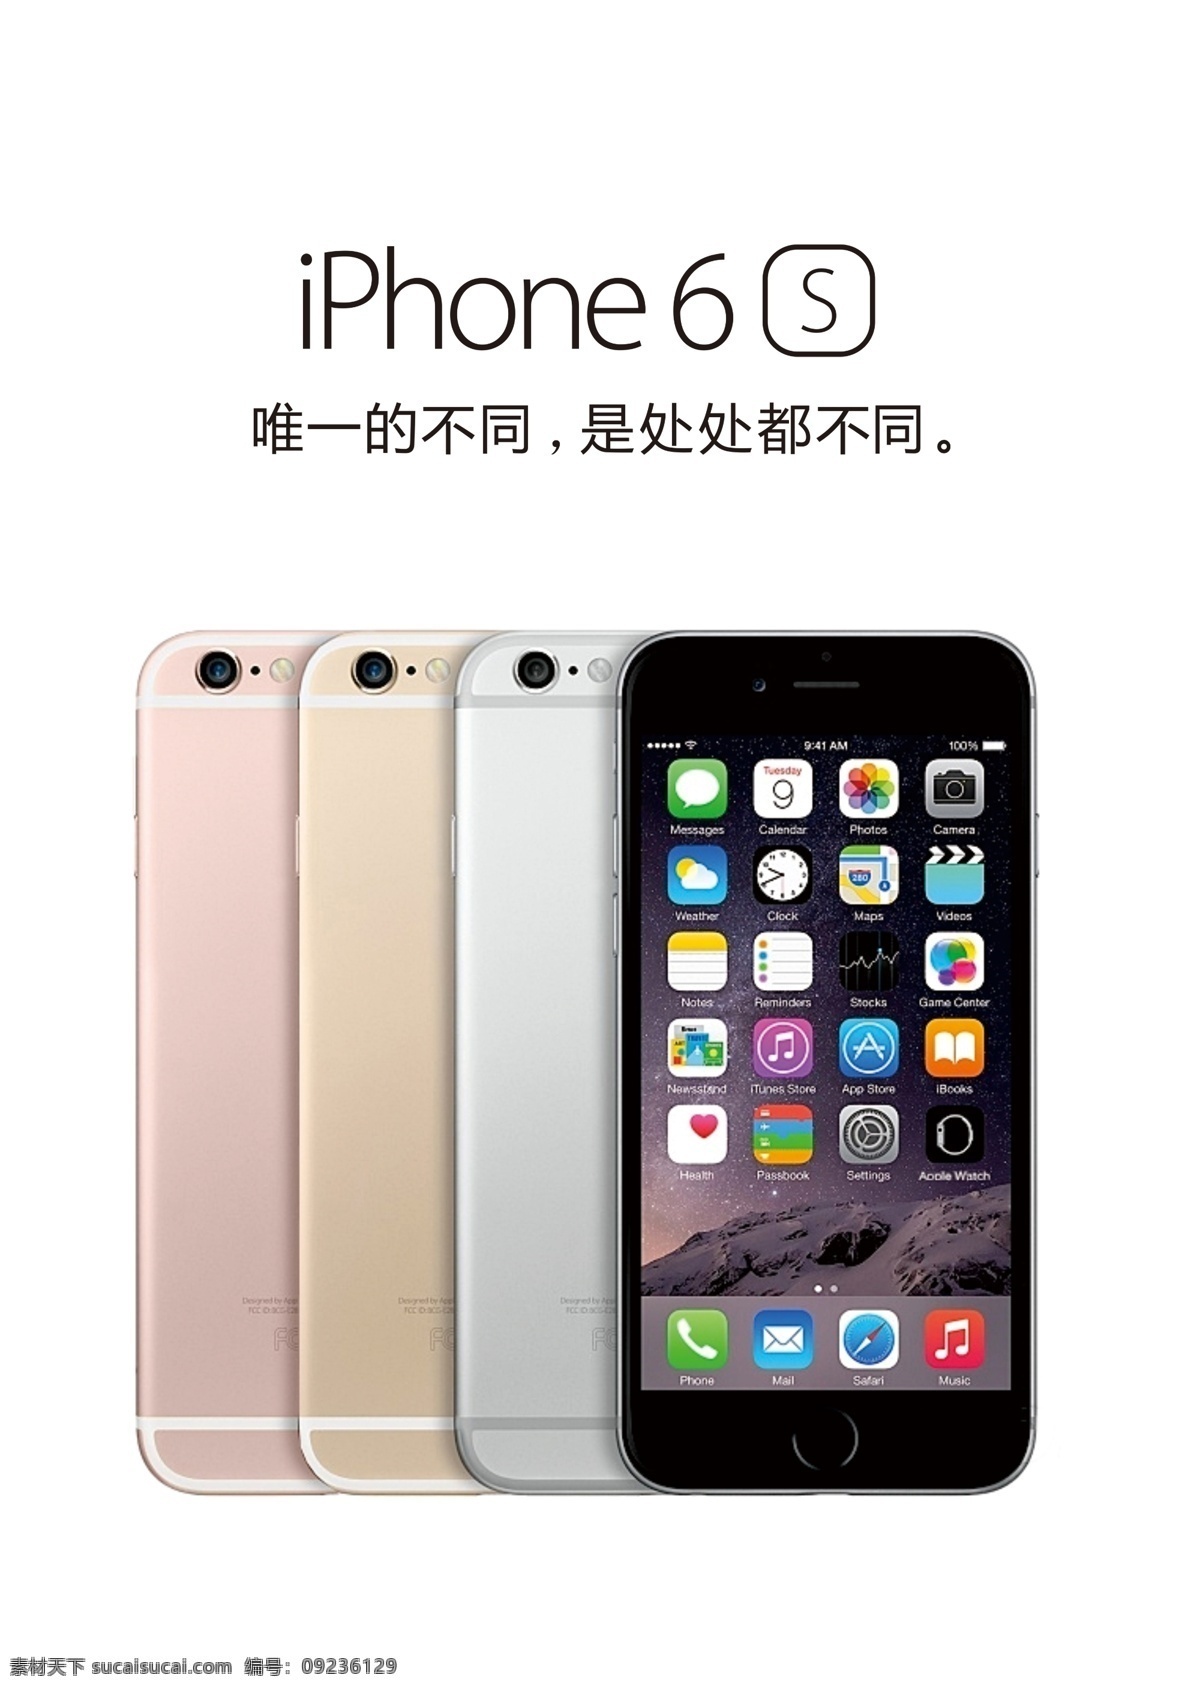 iphone6s 广告 苹果 苹果手机 活动 海报 iphone